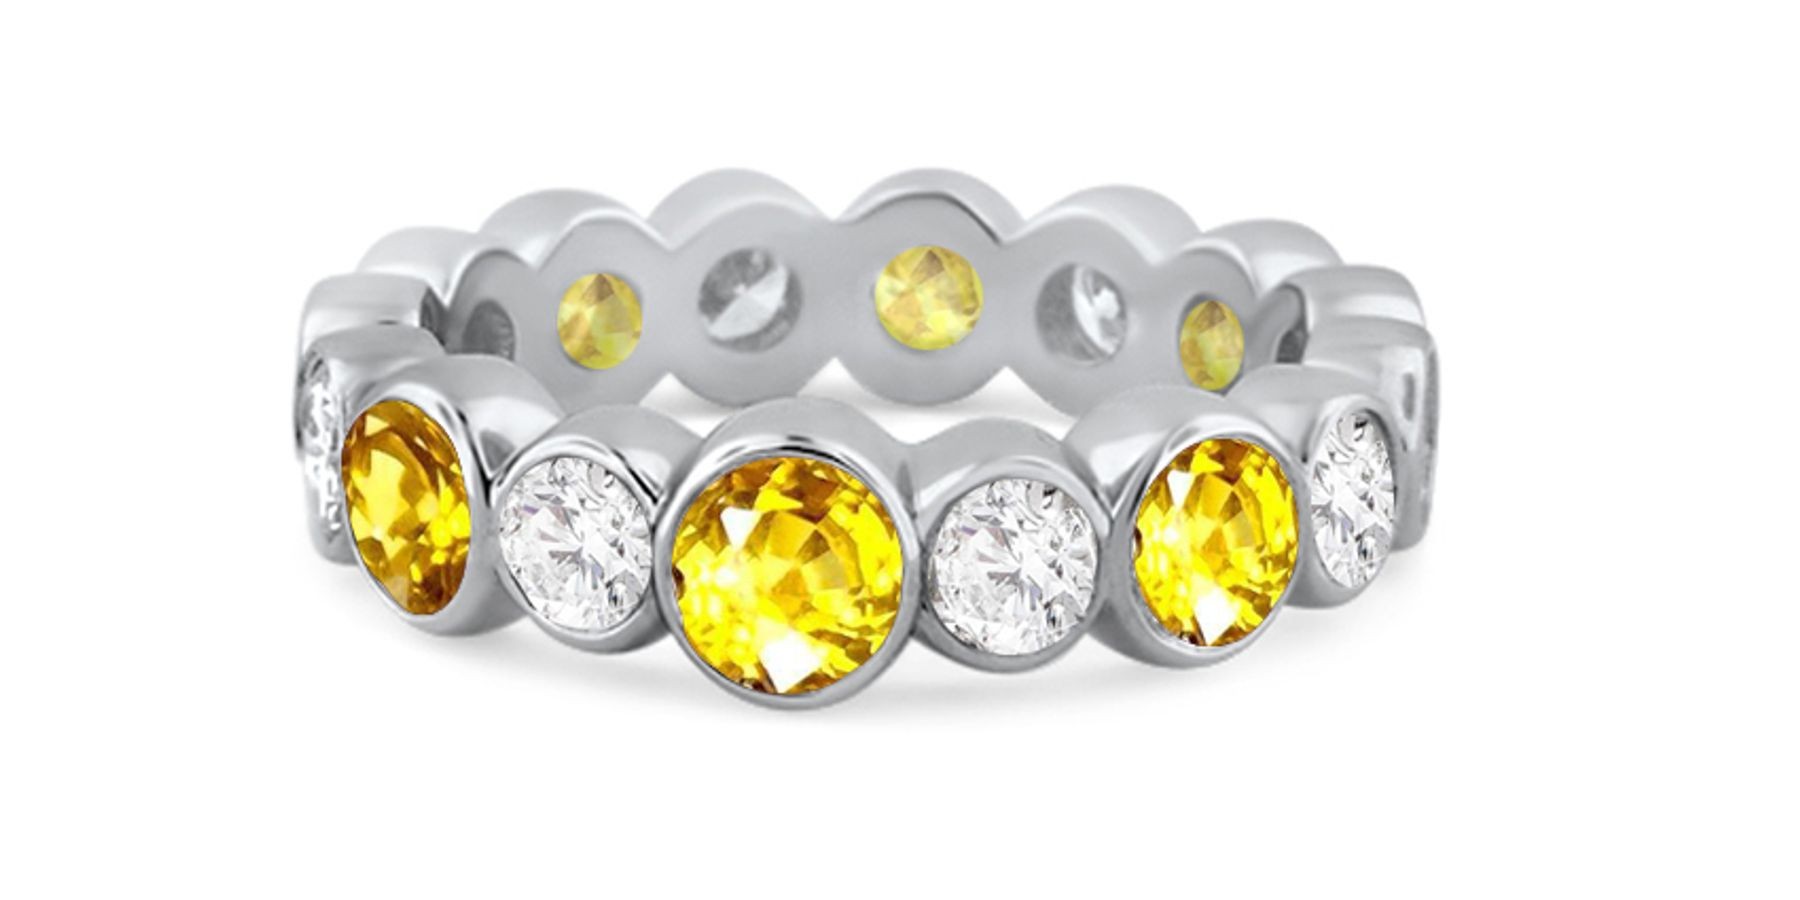 Shop Fine Quality Made To Order Round Bezel Set Diamond & Yellow Sapphire Eternity Style Wedding & Anniversary Rings